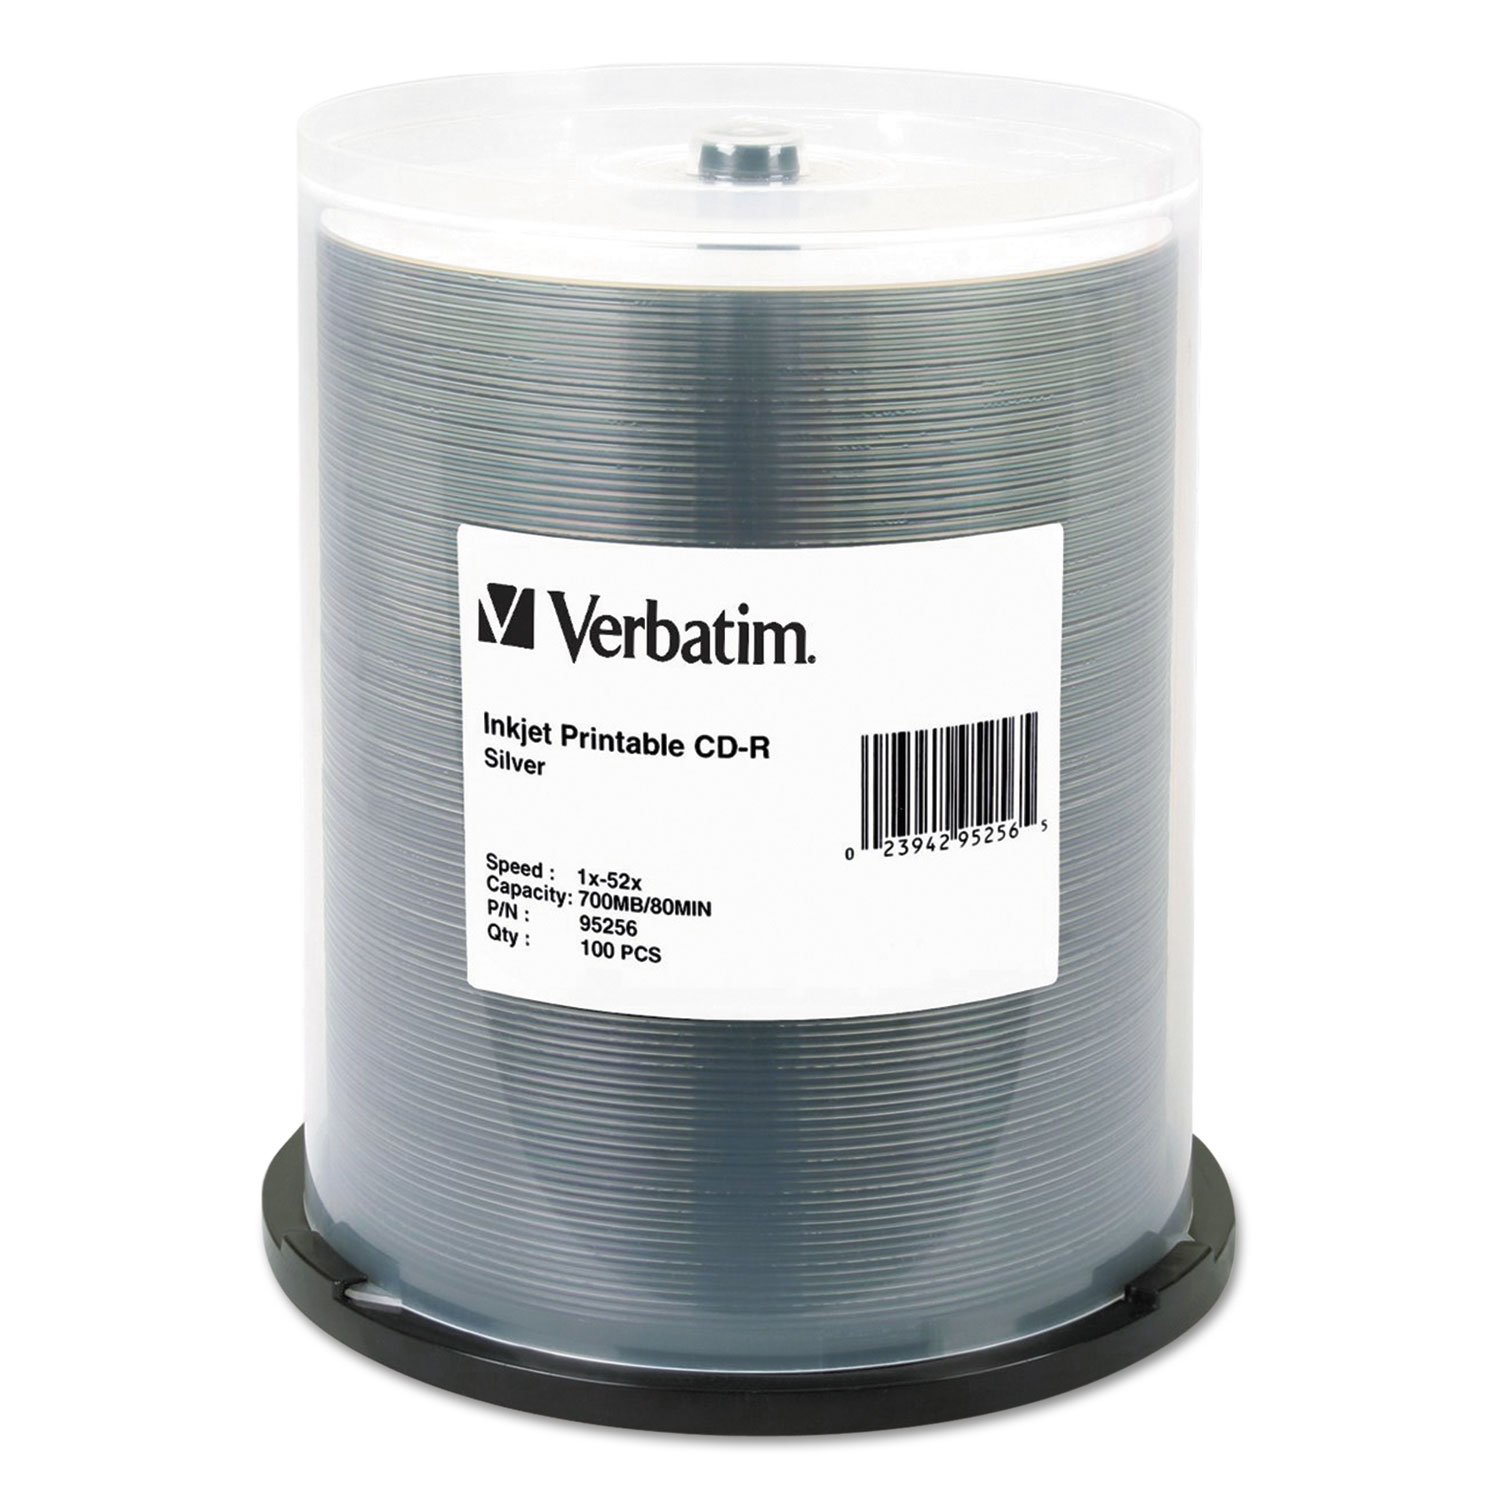  Verbatim 95256 CD-R, 700MB, 52X, Silver Inkjet Printable, 100/PK Spindle (VER95256) 